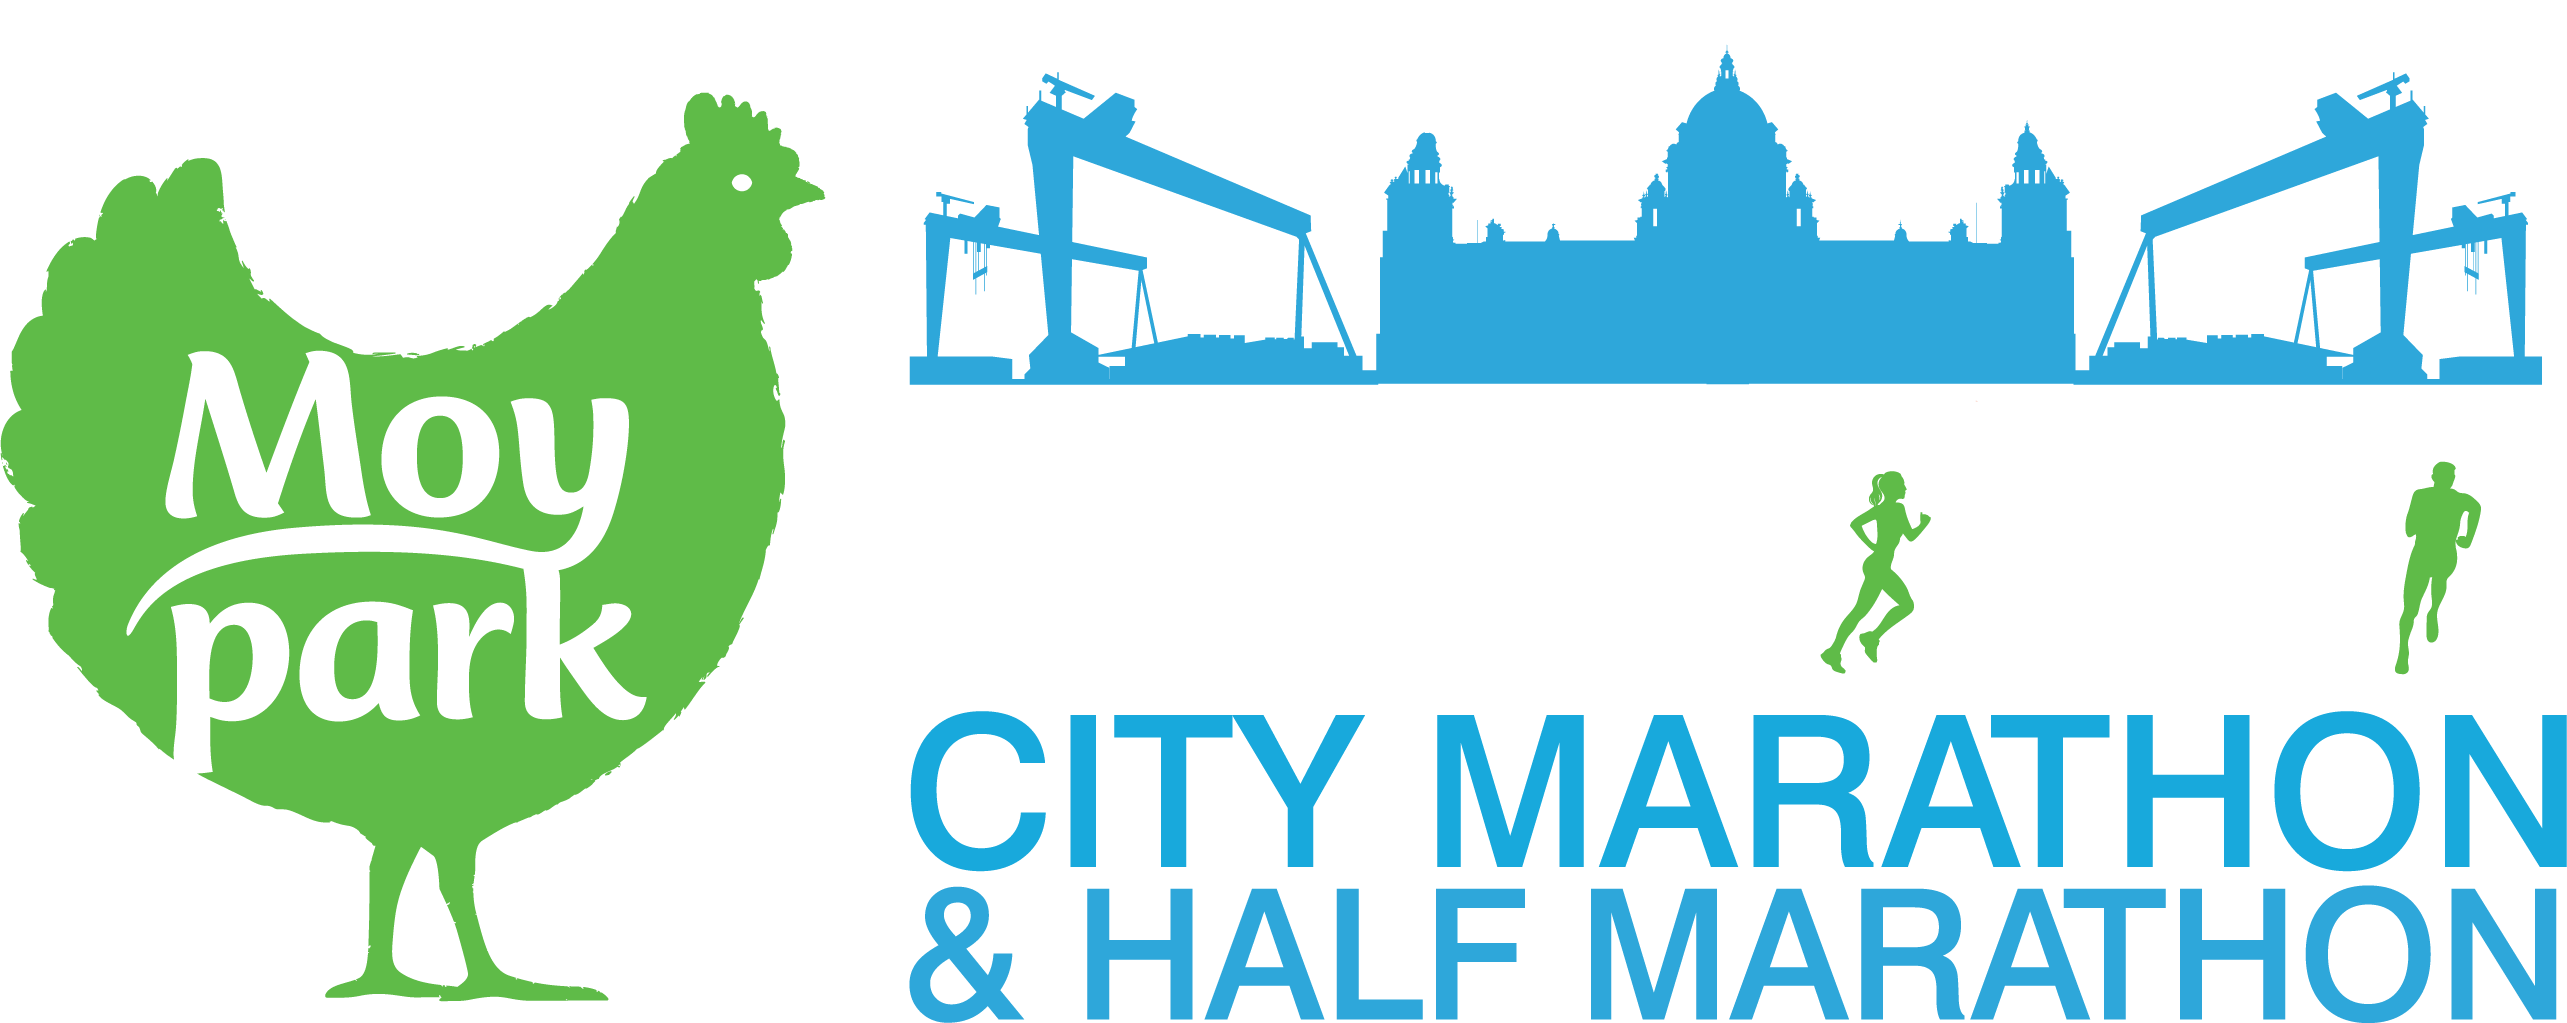 The Moy Park Belfast City Marathon